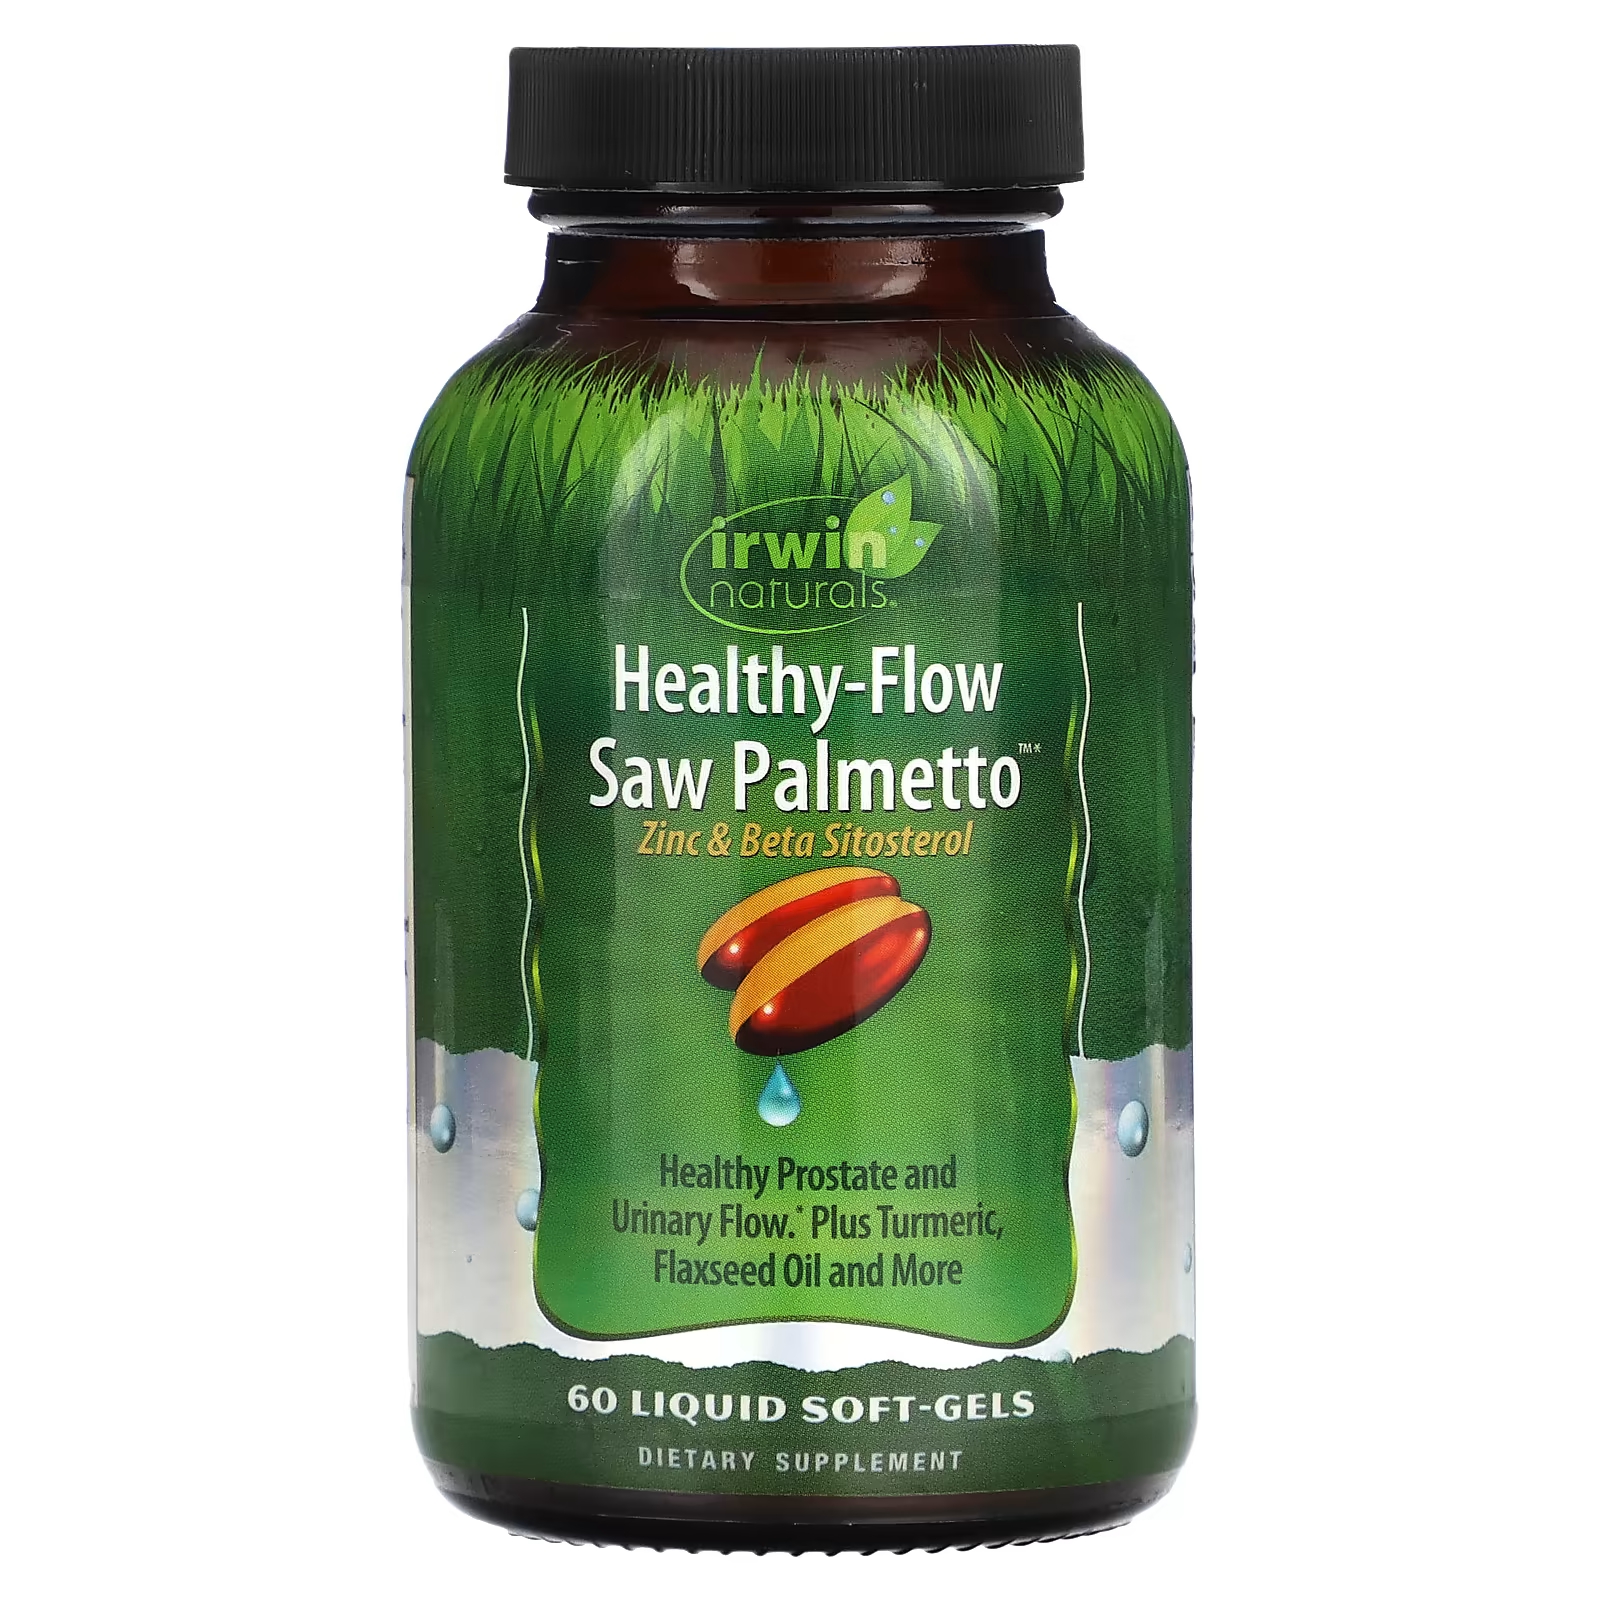 Пищевая добавка Irwin Naturals Healthy-Flow Saw Palmetto, 60 жидких таблеток цена и фото